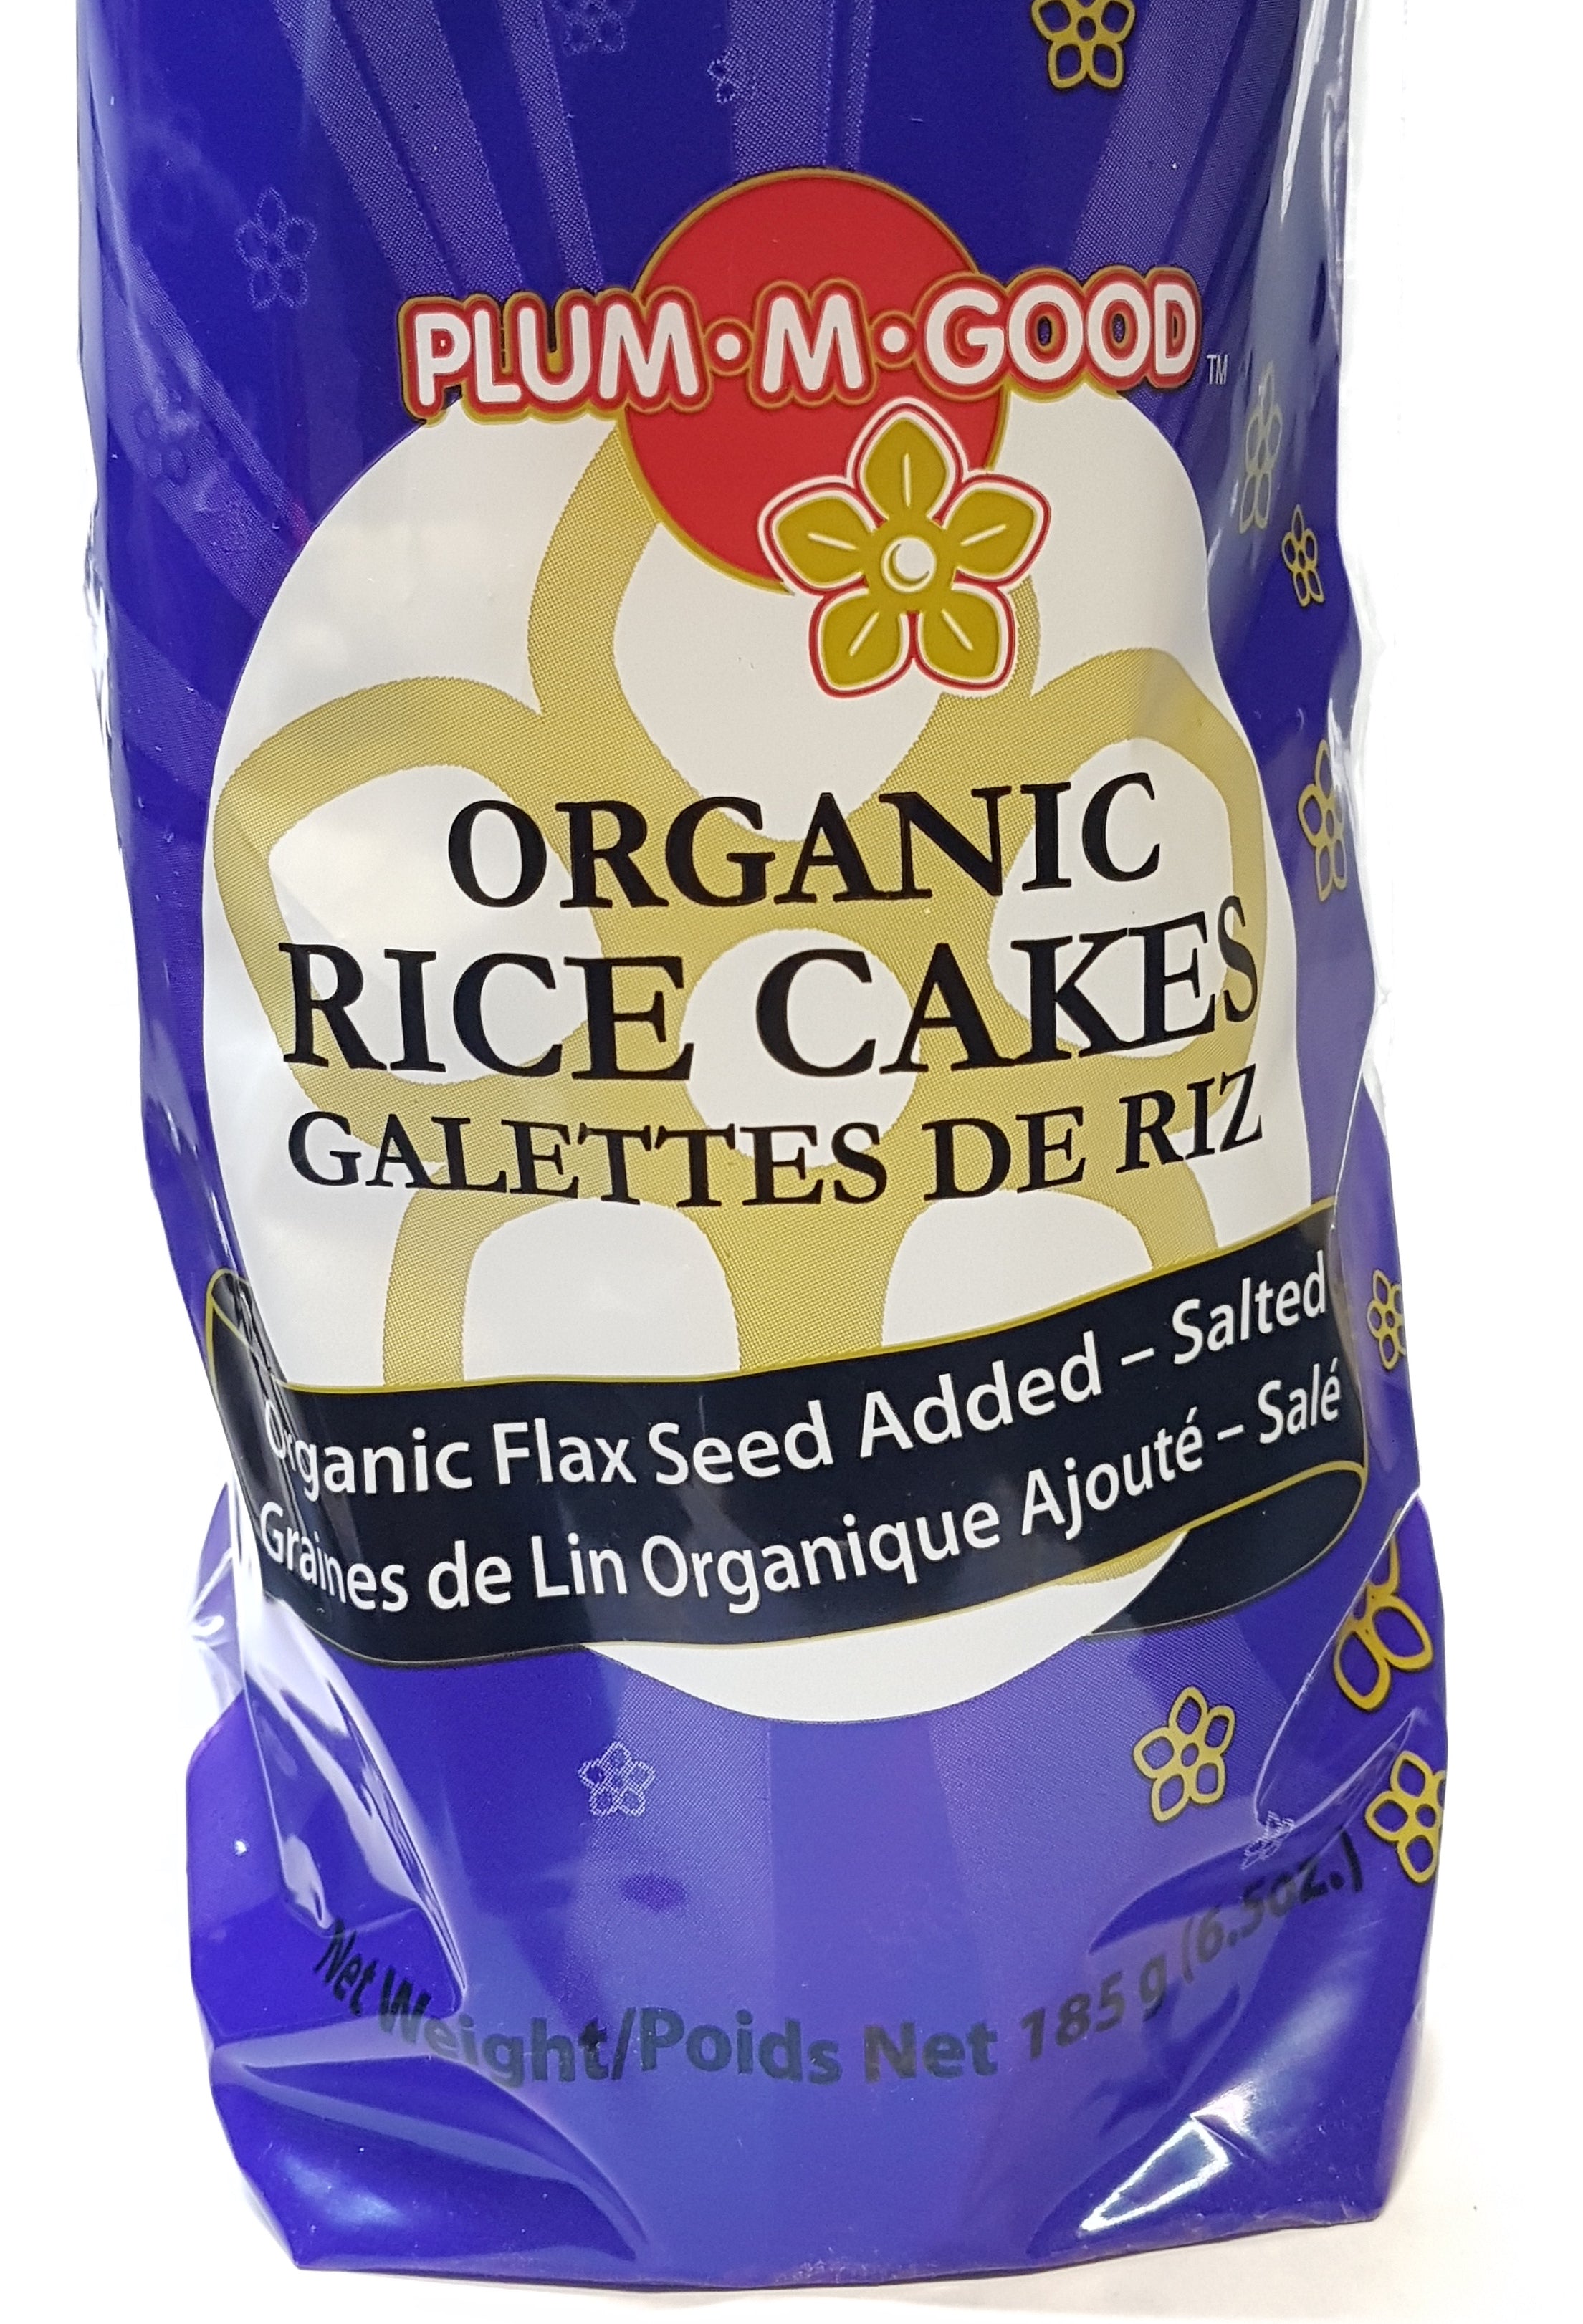 Plum M Good Organic Rice Cake w/ Flax - Salted (185g) - Lifestyle Markets